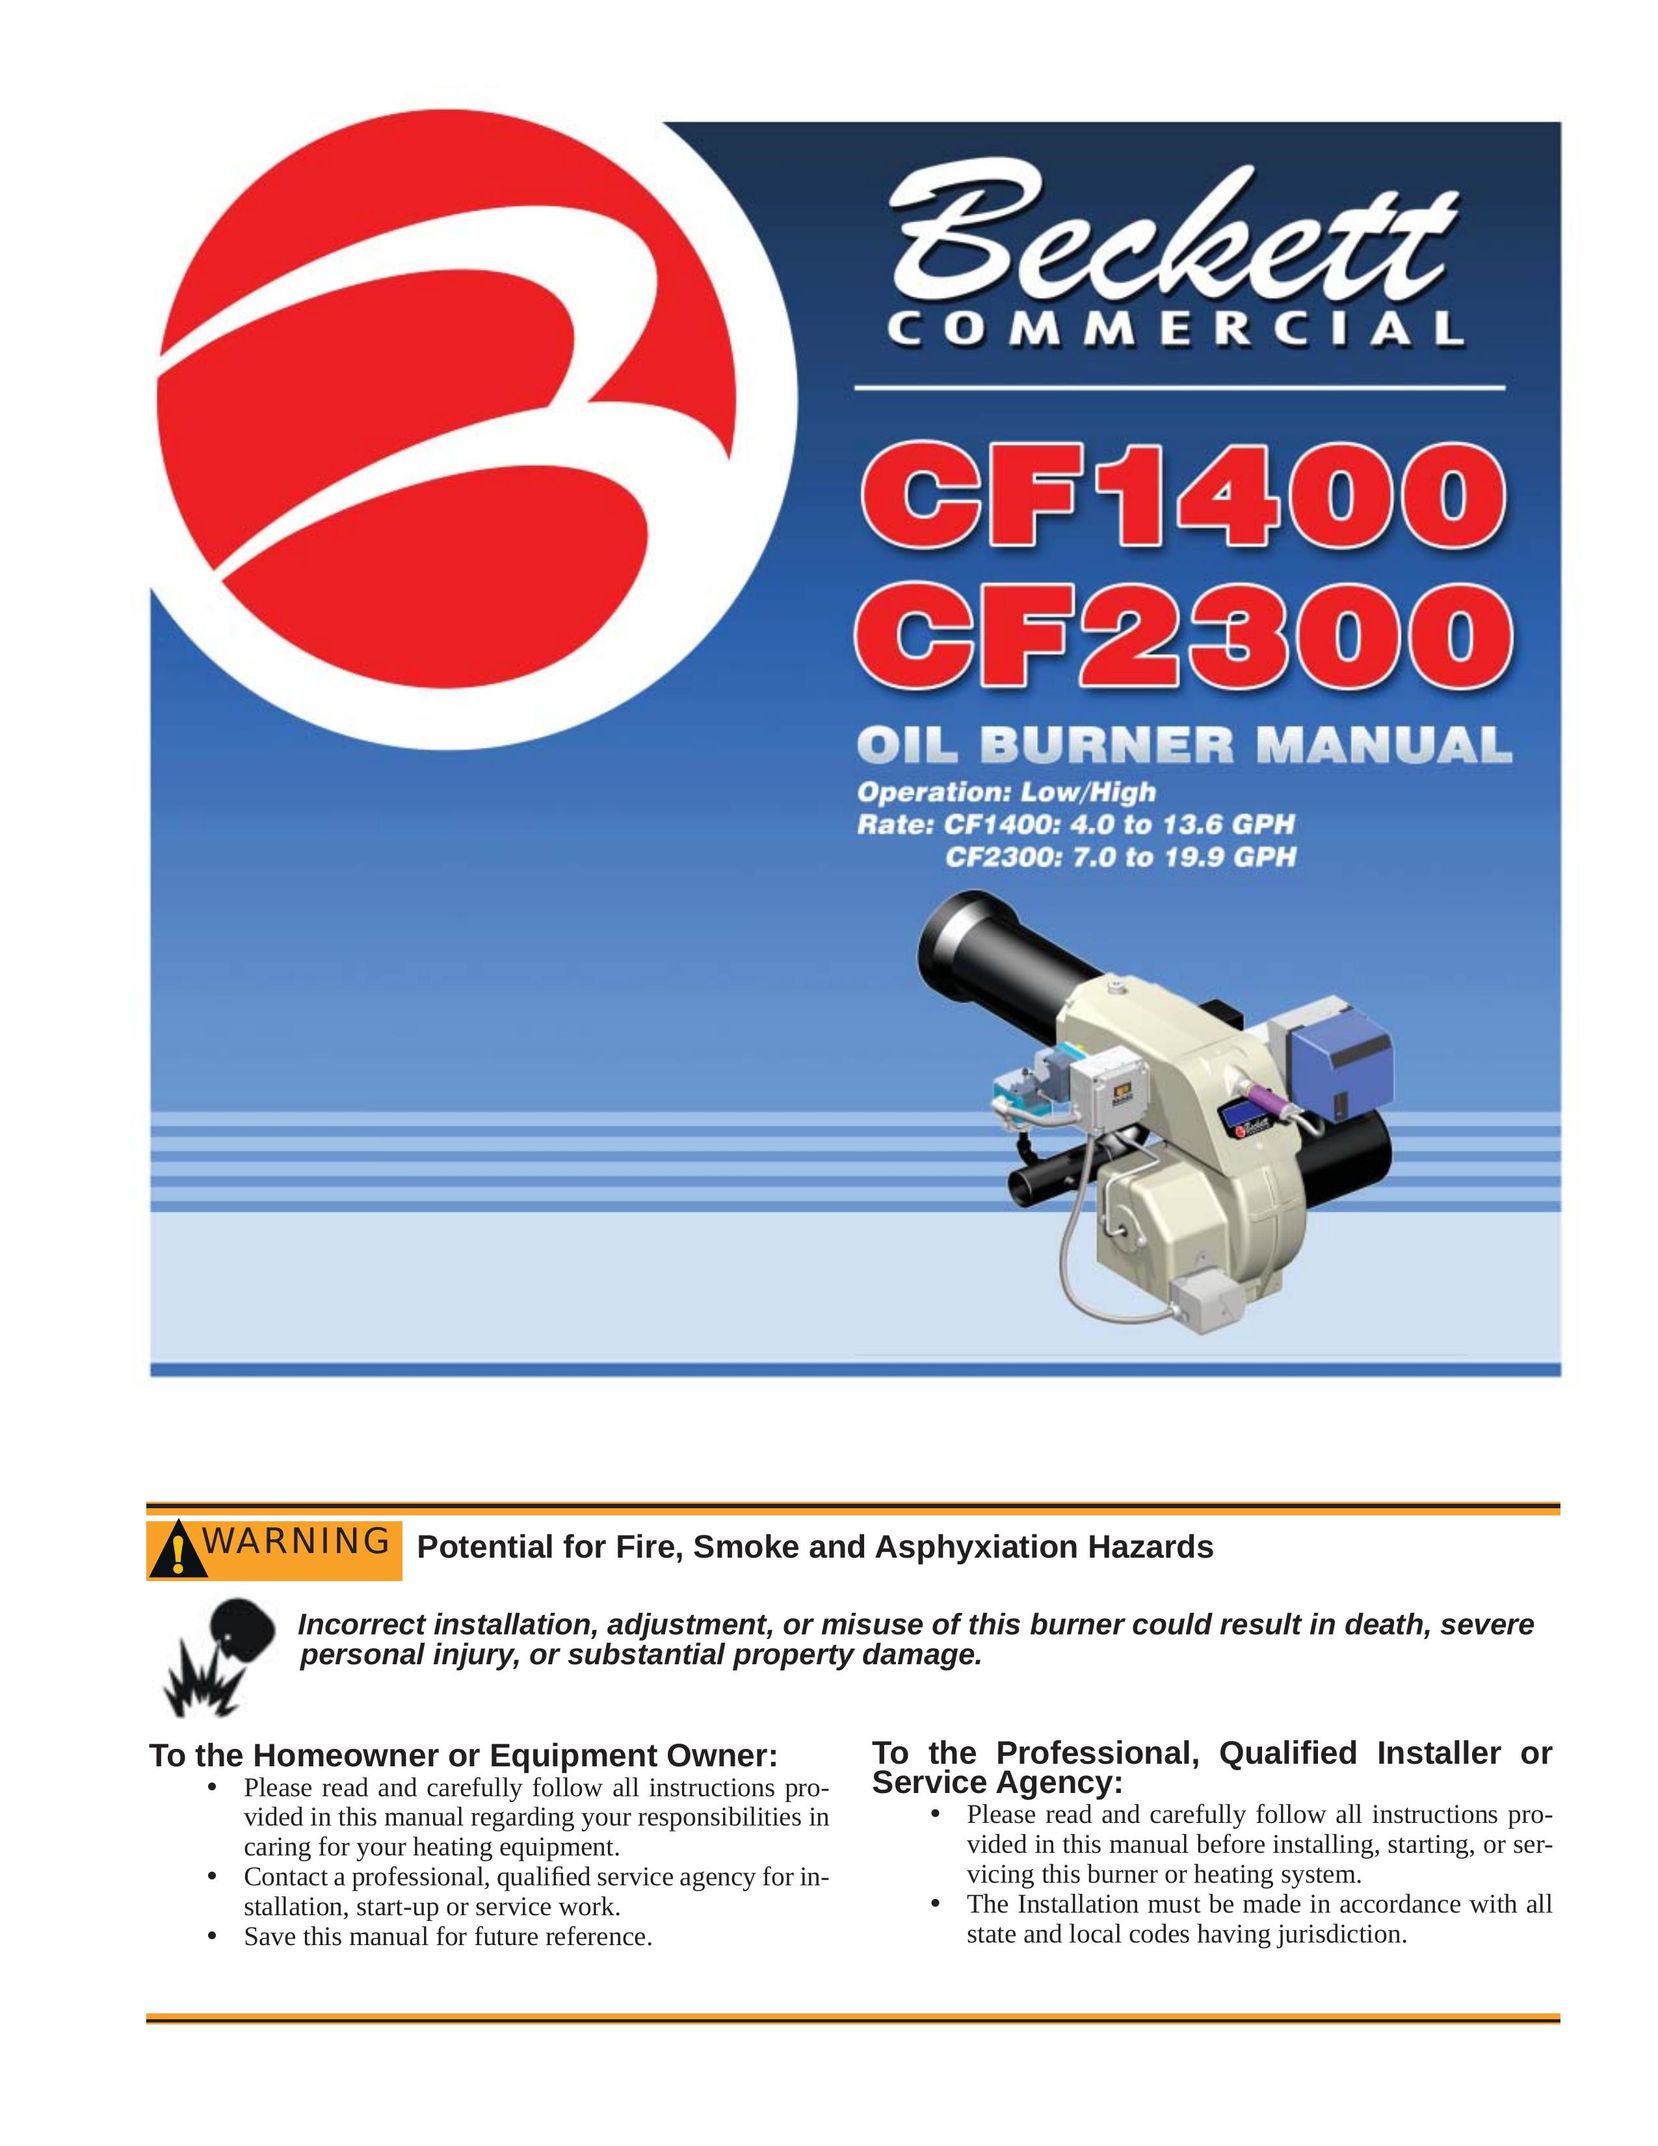 Beckett CF2300 Burner User Manual